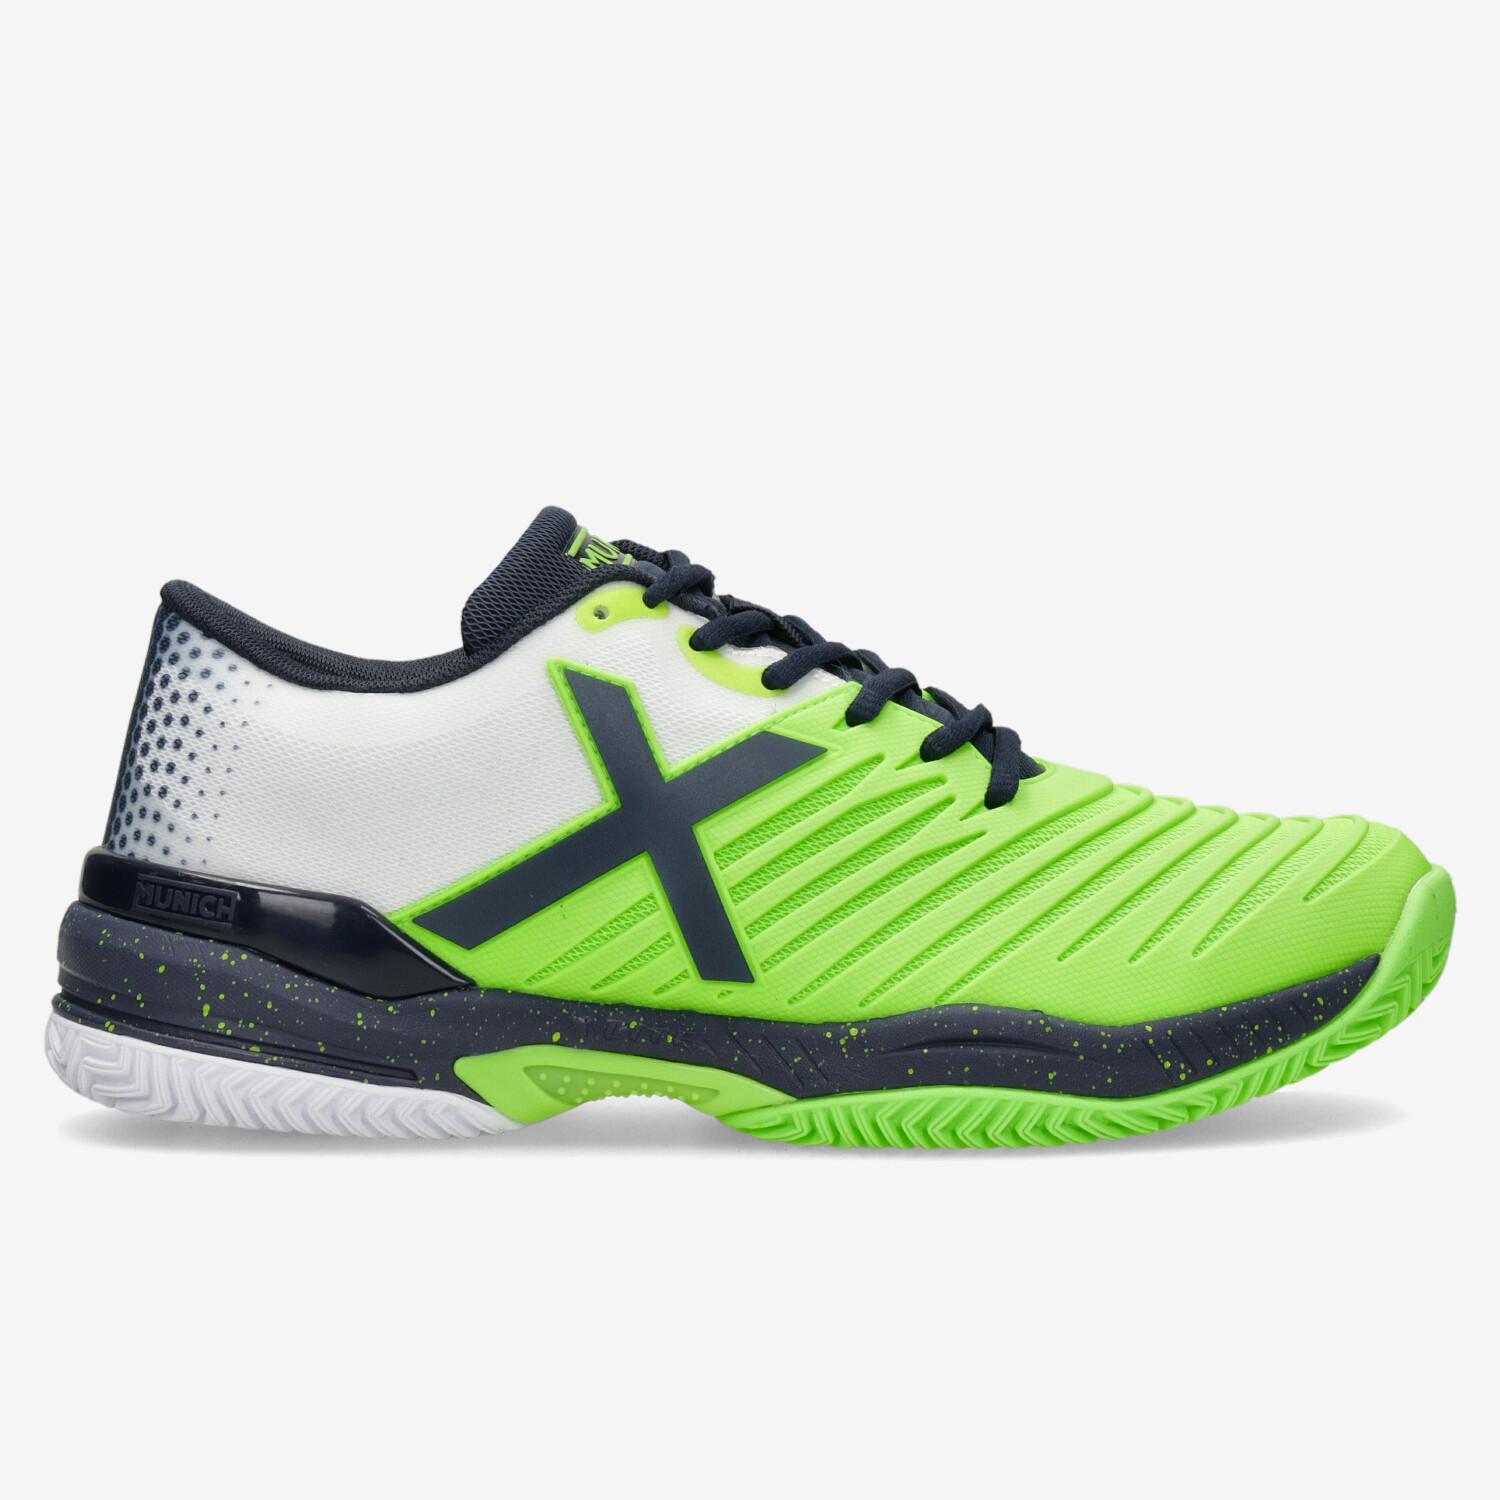 Munich Padx 24 - Vert - Chaussures de padel homme sports taille 46